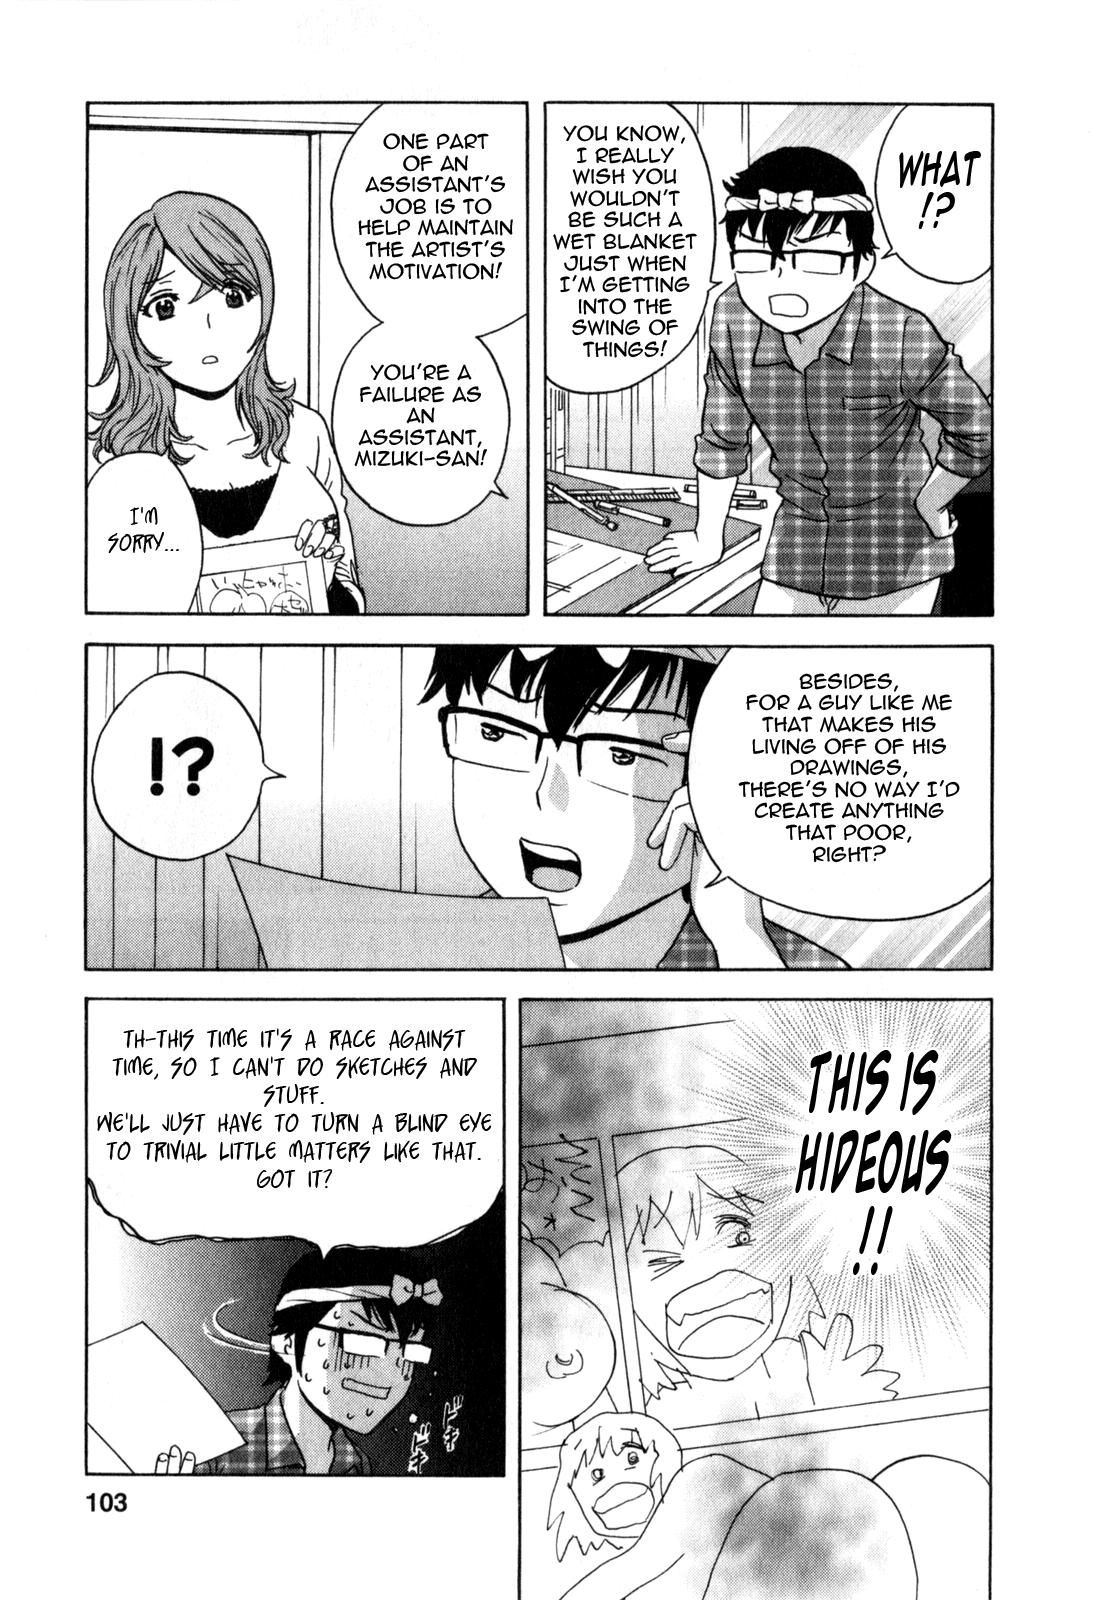 Life with Married Women Just Like a Manga 3 104